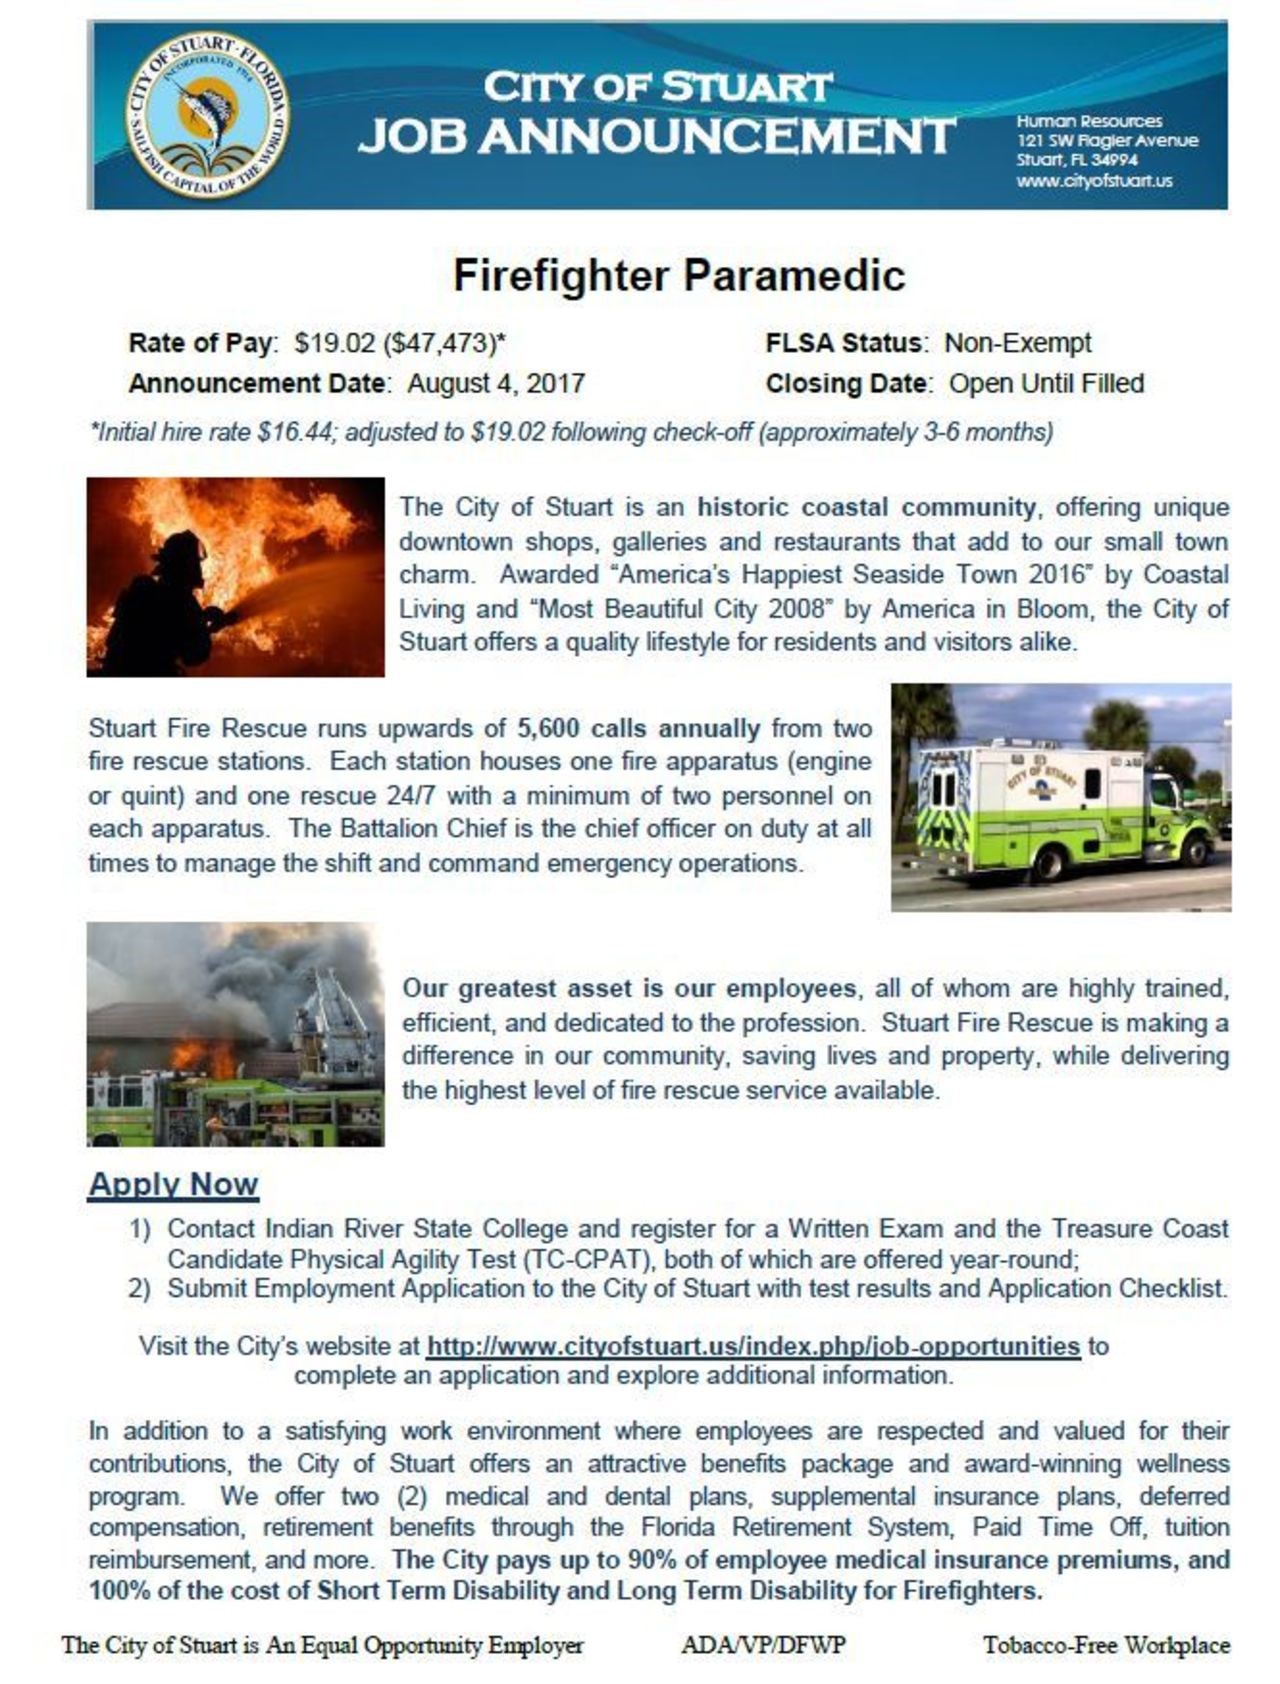 City of Stuart Hiring Firefighter/Paramedic